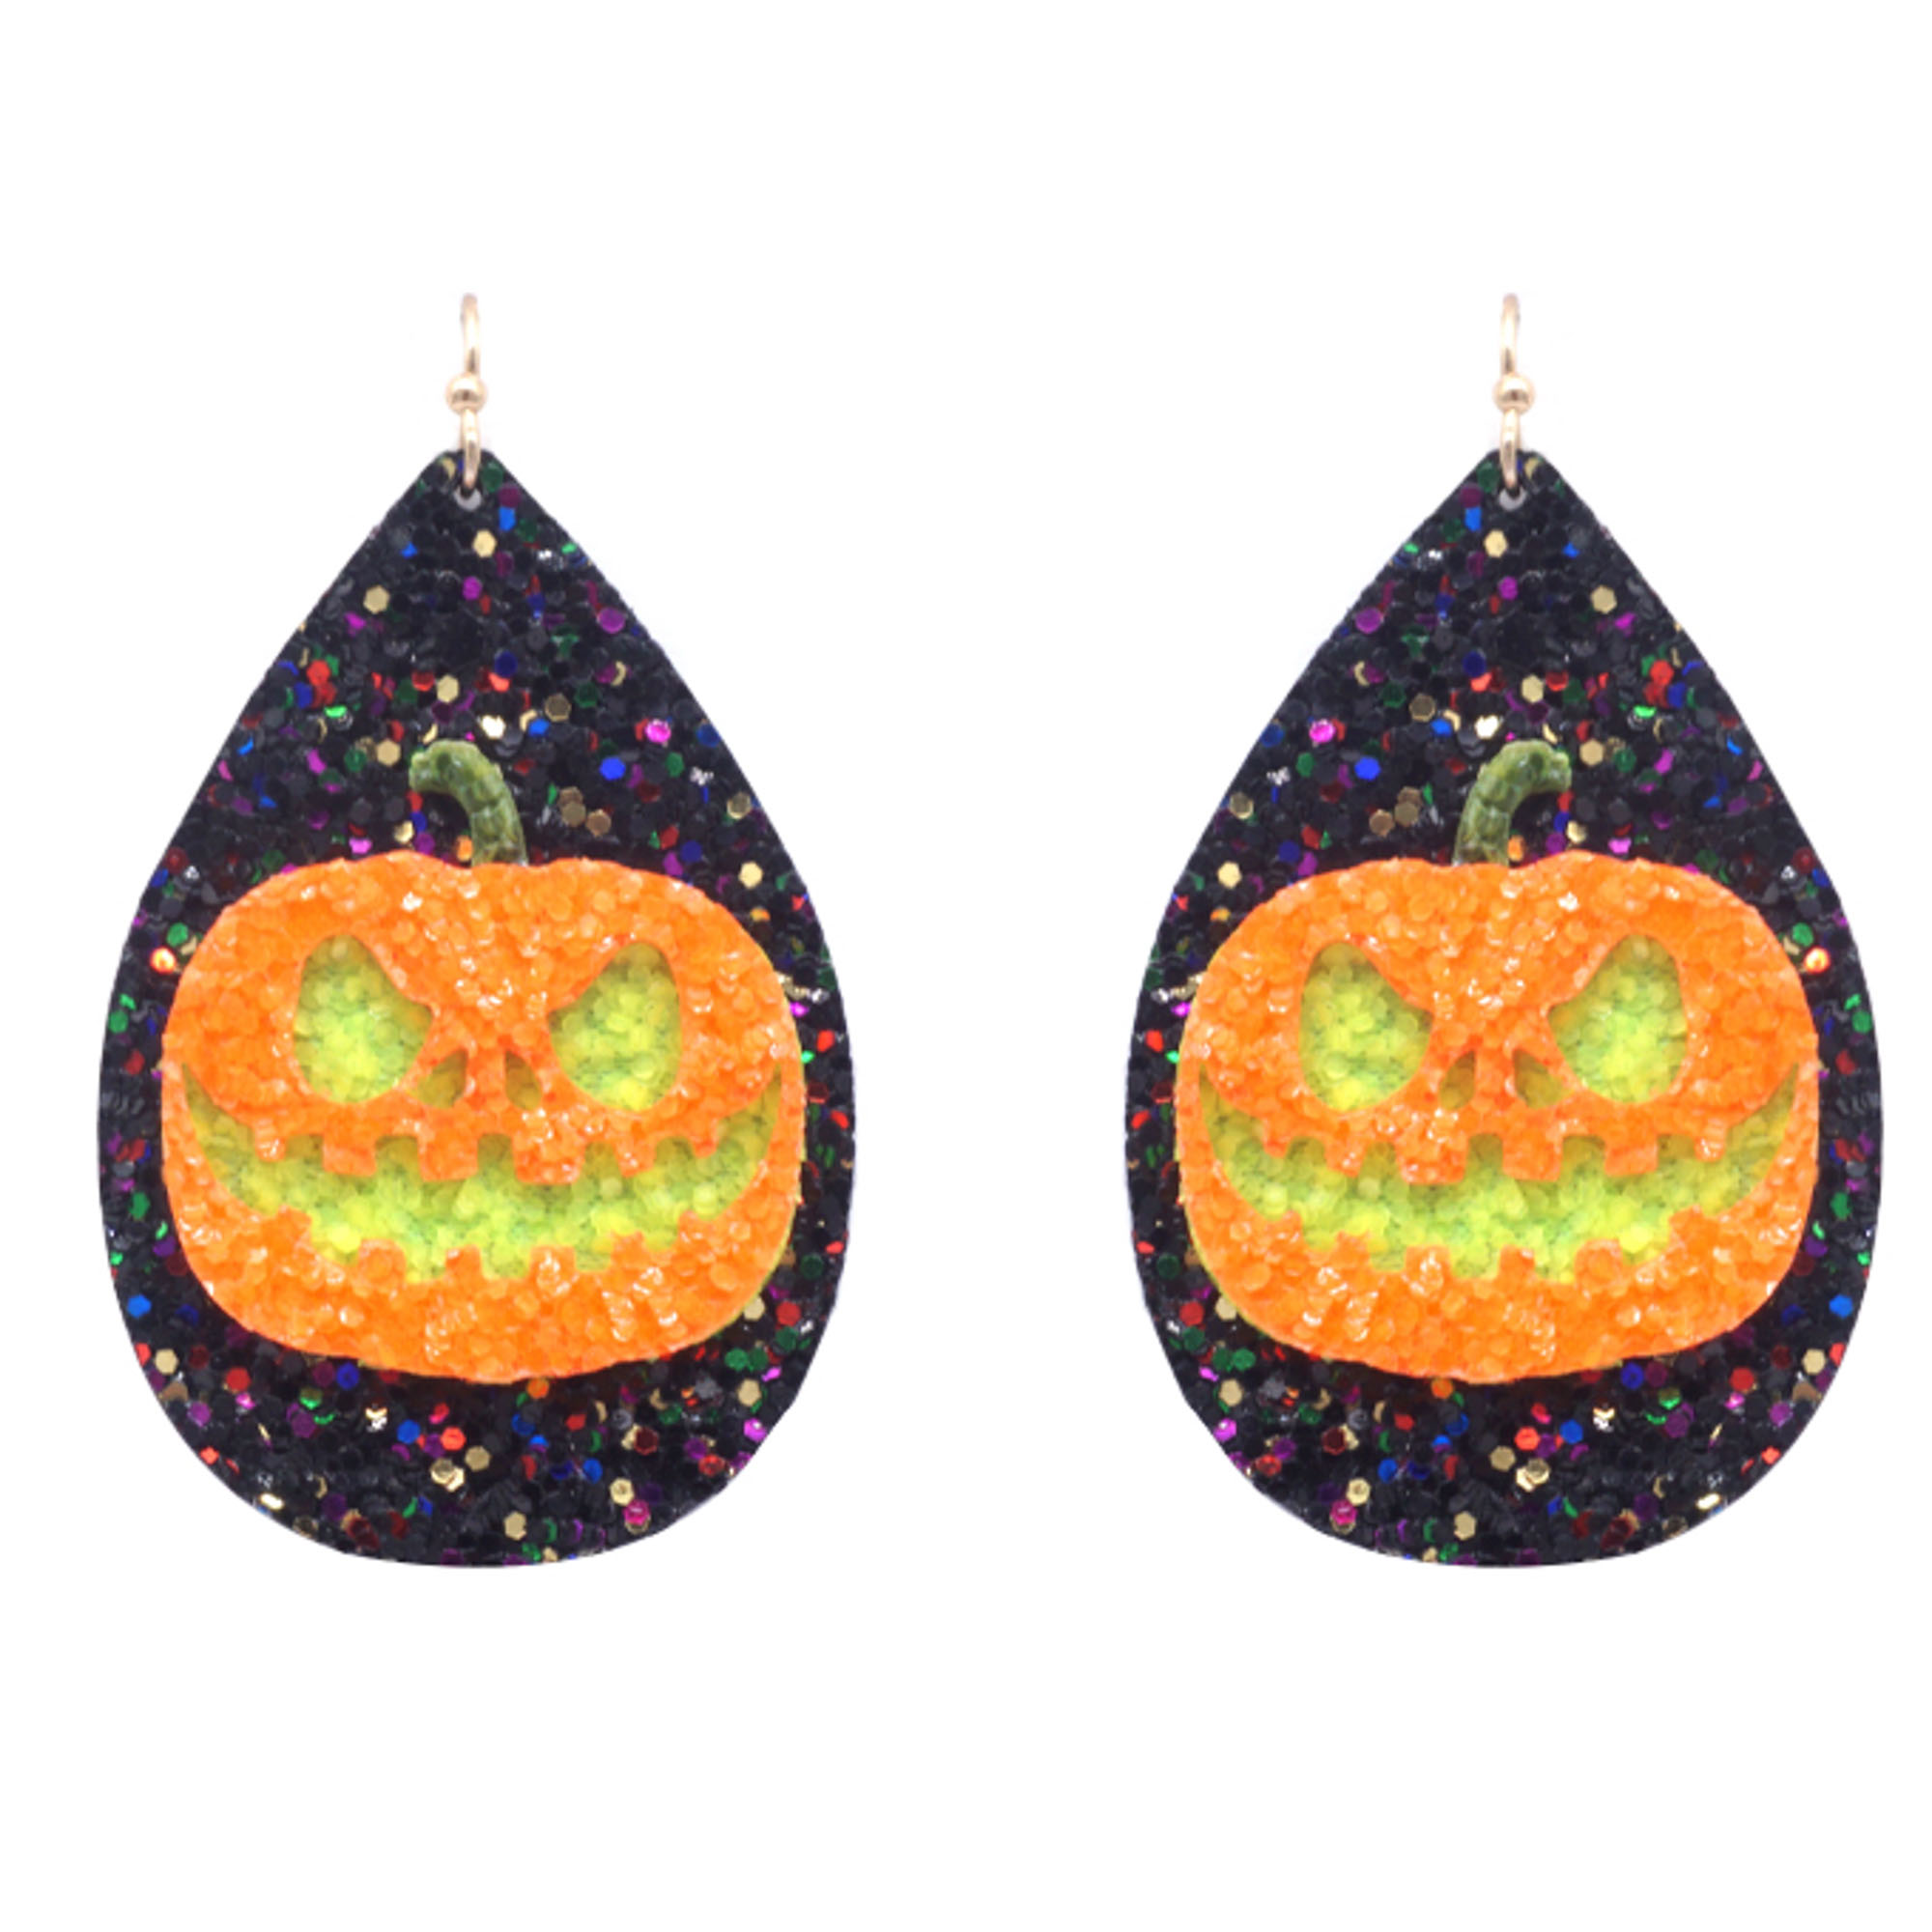  COHEALI 2pcs halloween gifts halloween favors bracelet making  supplies DIY earrings Earring Stud Hooks Earring Backs Findings earings